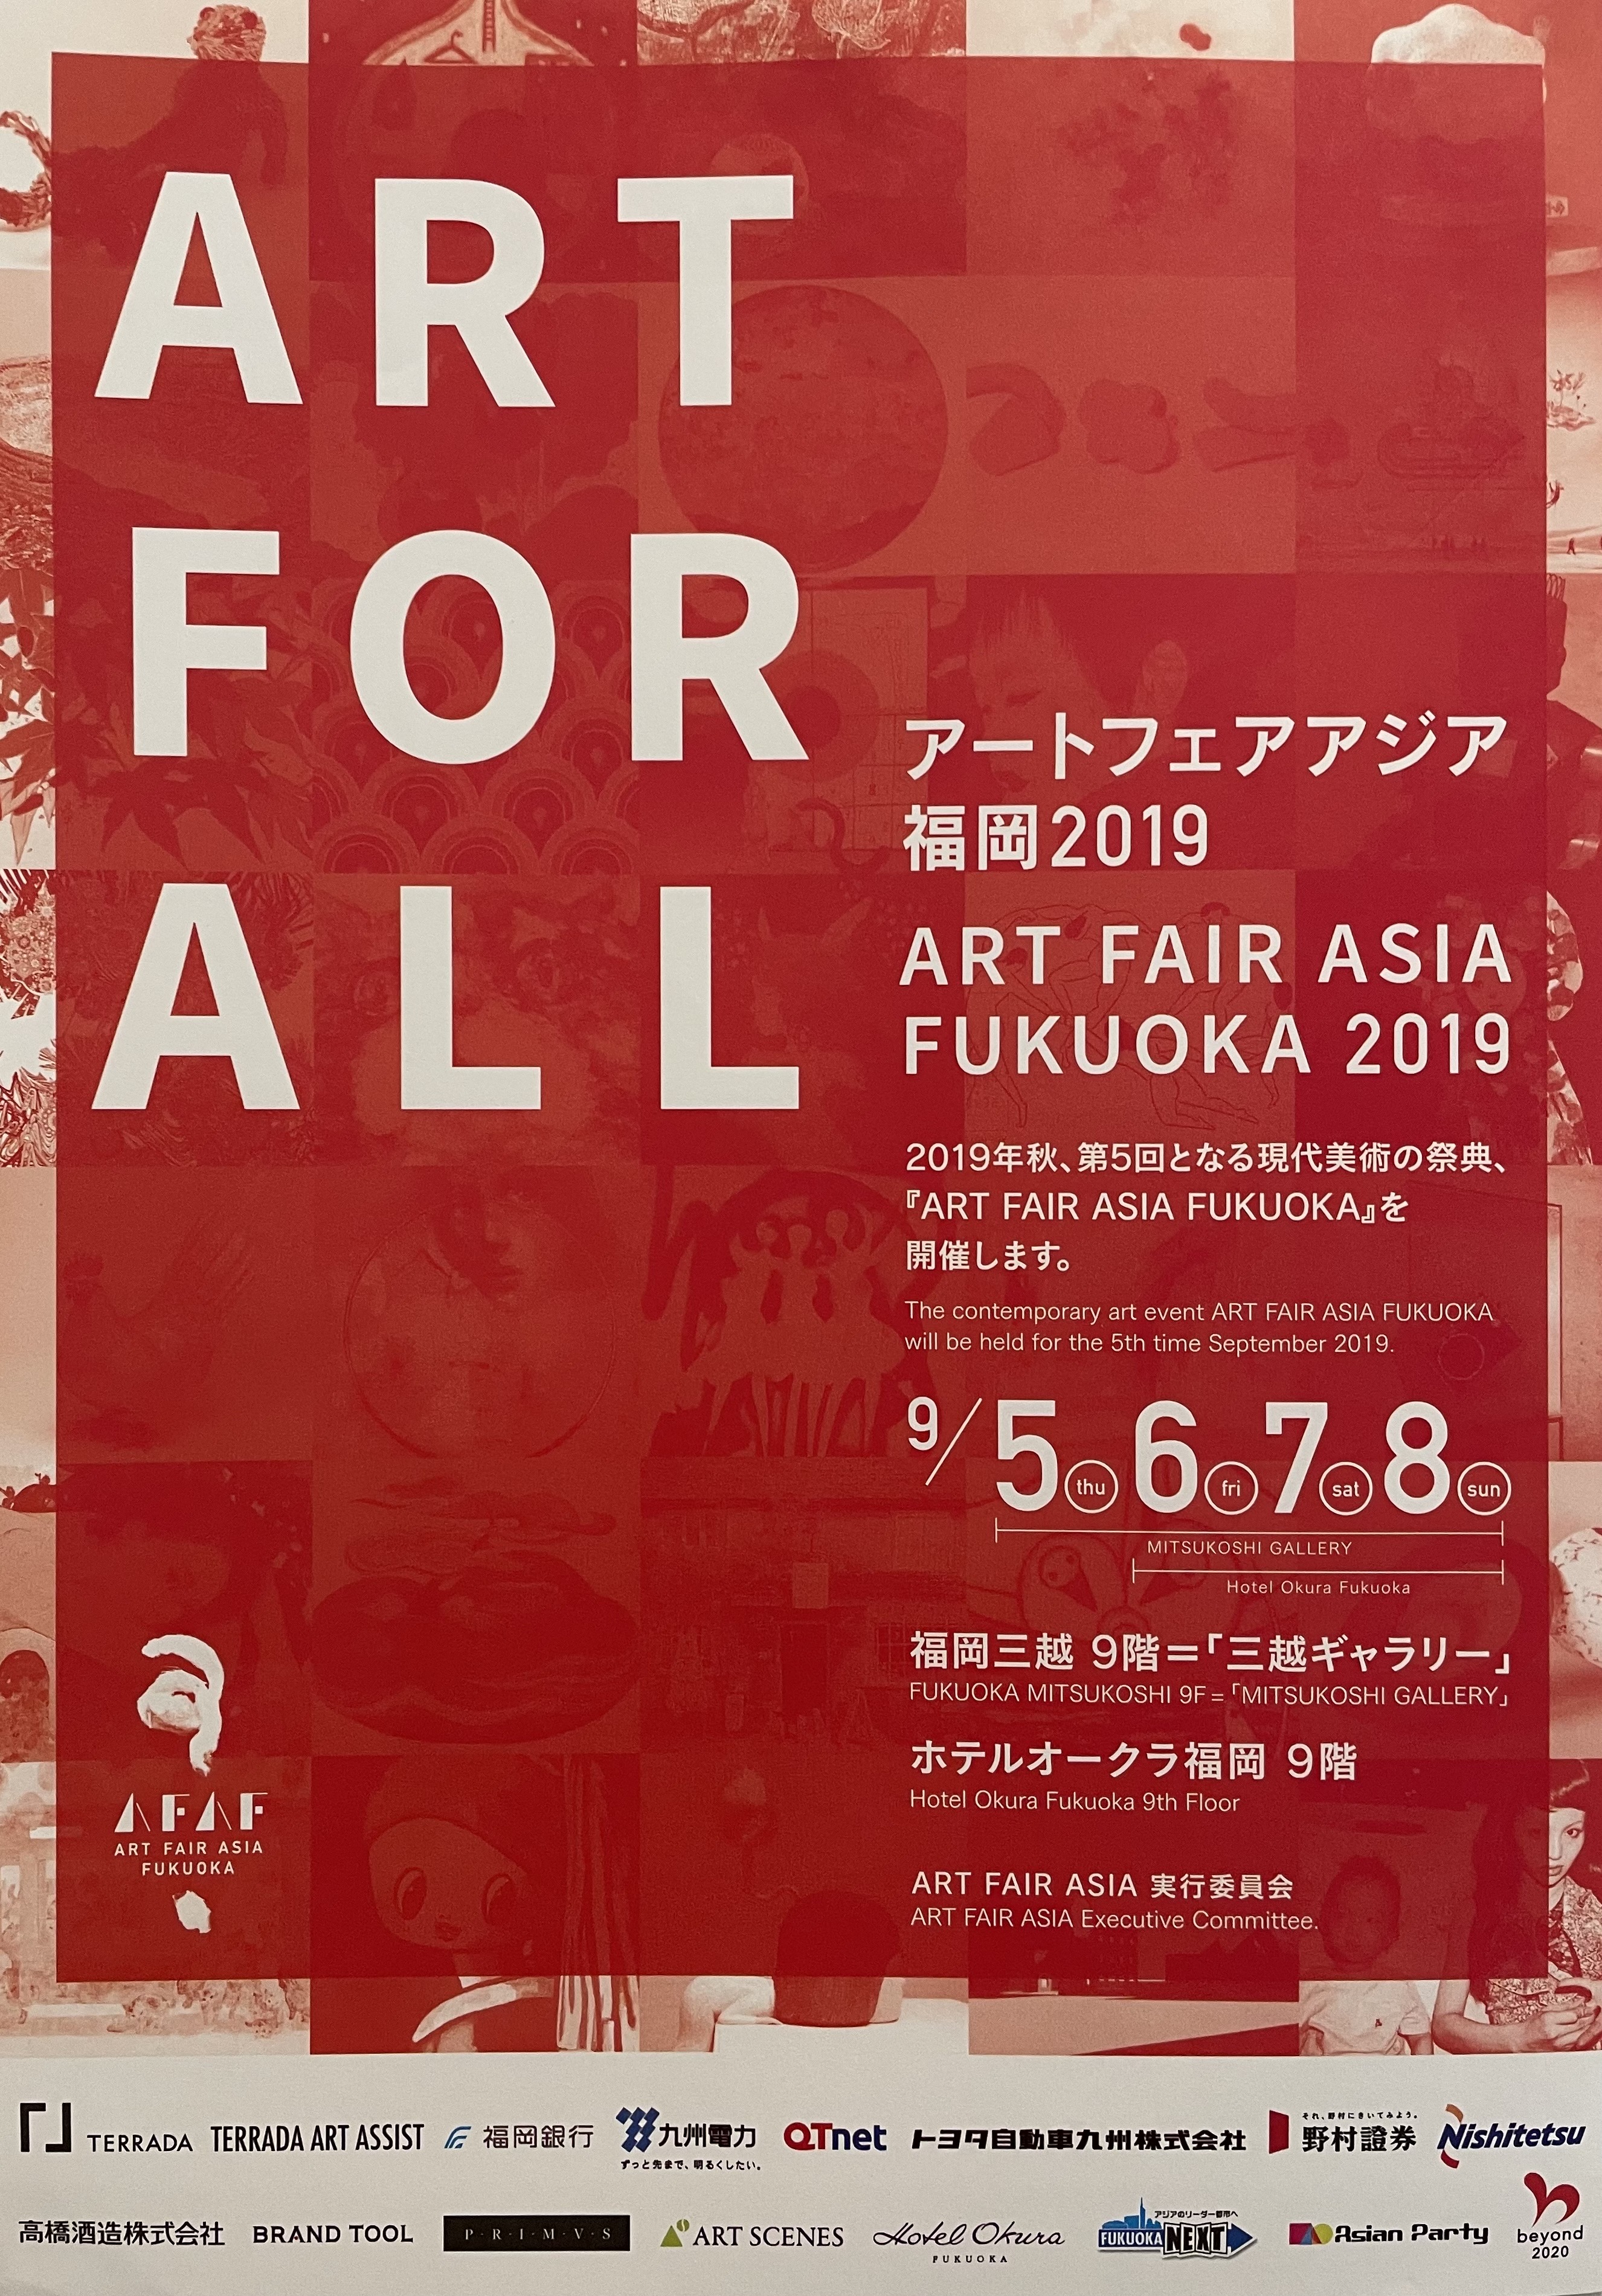 Art Fair Asia Fukuoka 2019